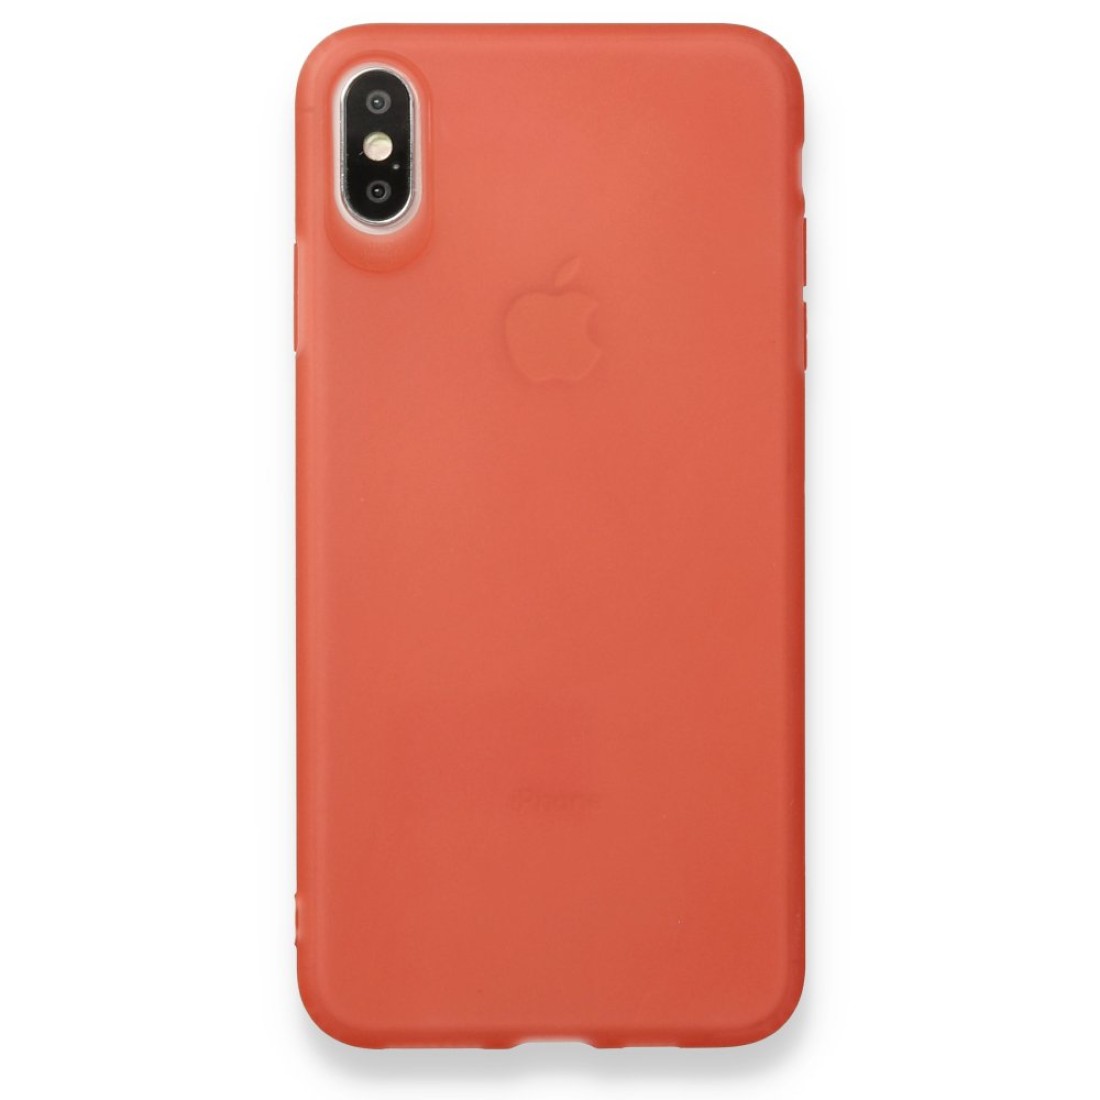 Apple iPhone XS Max Kılıf Hopi Silikon - Kırmızı